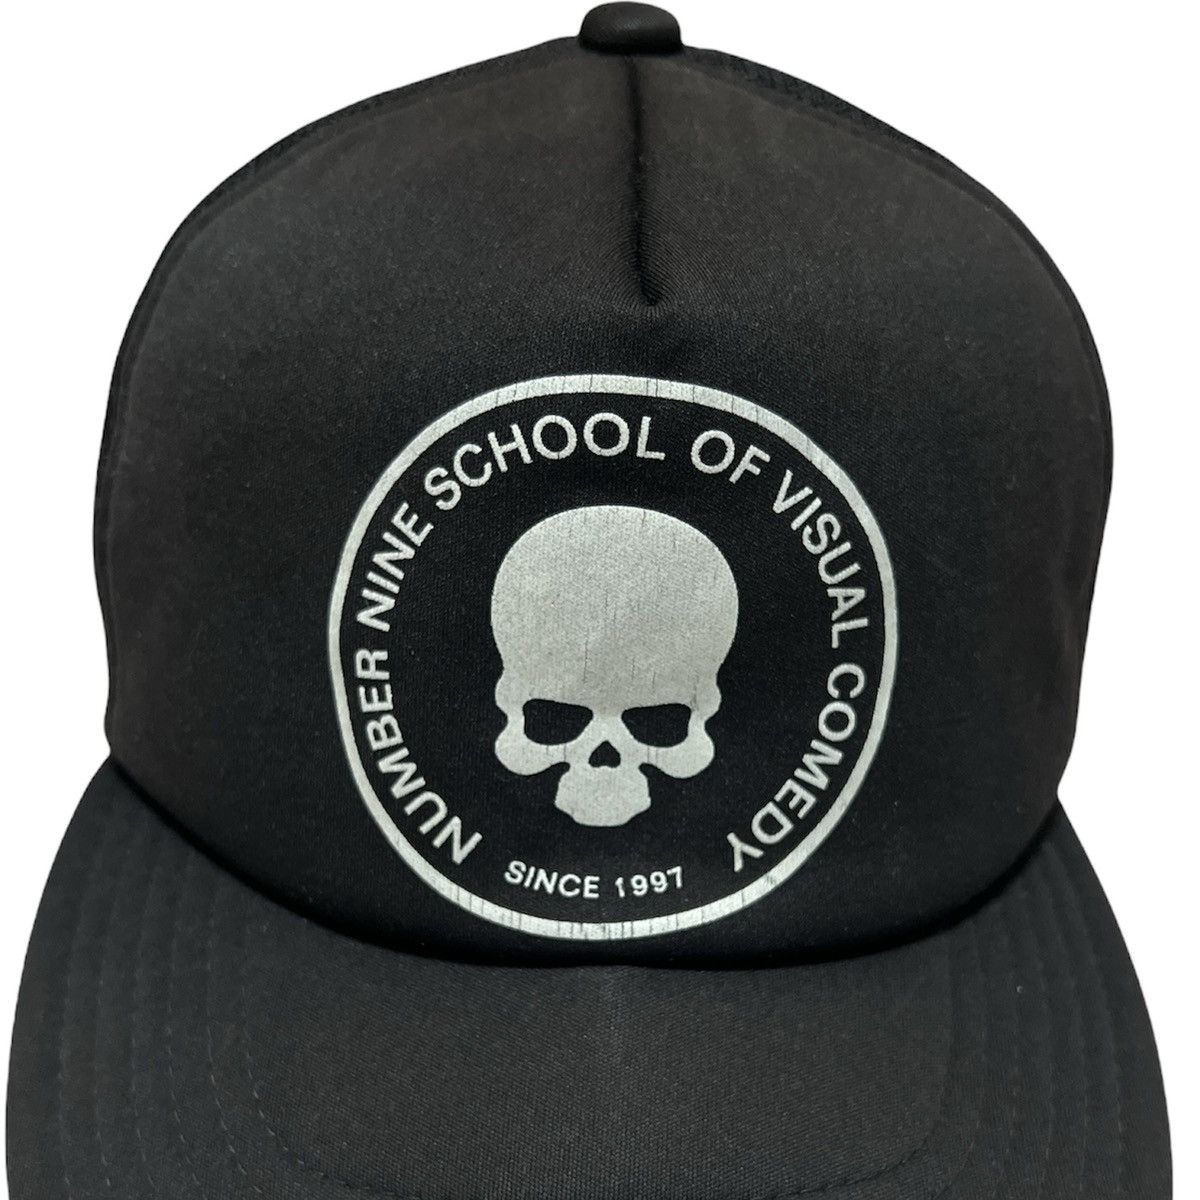 SS01 Number Nine School Of Visual Comedy Trucker Hat - 2